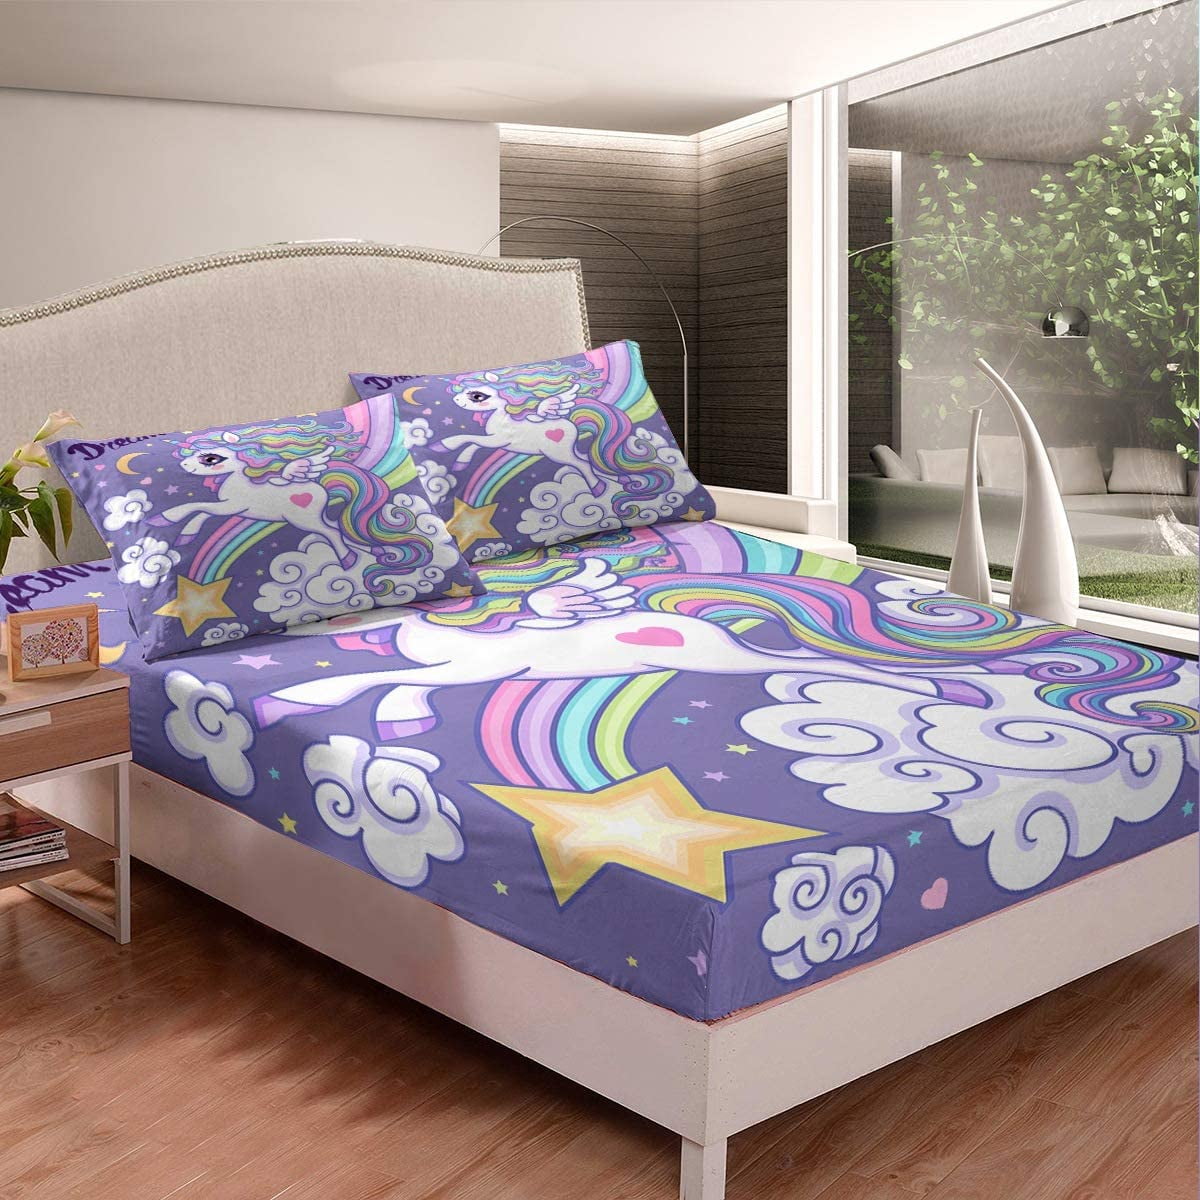 Avocado Cartoon Sleeping Bed Sheet Sets Kids Adult Bedding Set Newest Bed Fitted Sheet Set Ultra Soft Deep Pocket Full 3pcs 1 Fitted Sheet & 2 Pillow Case